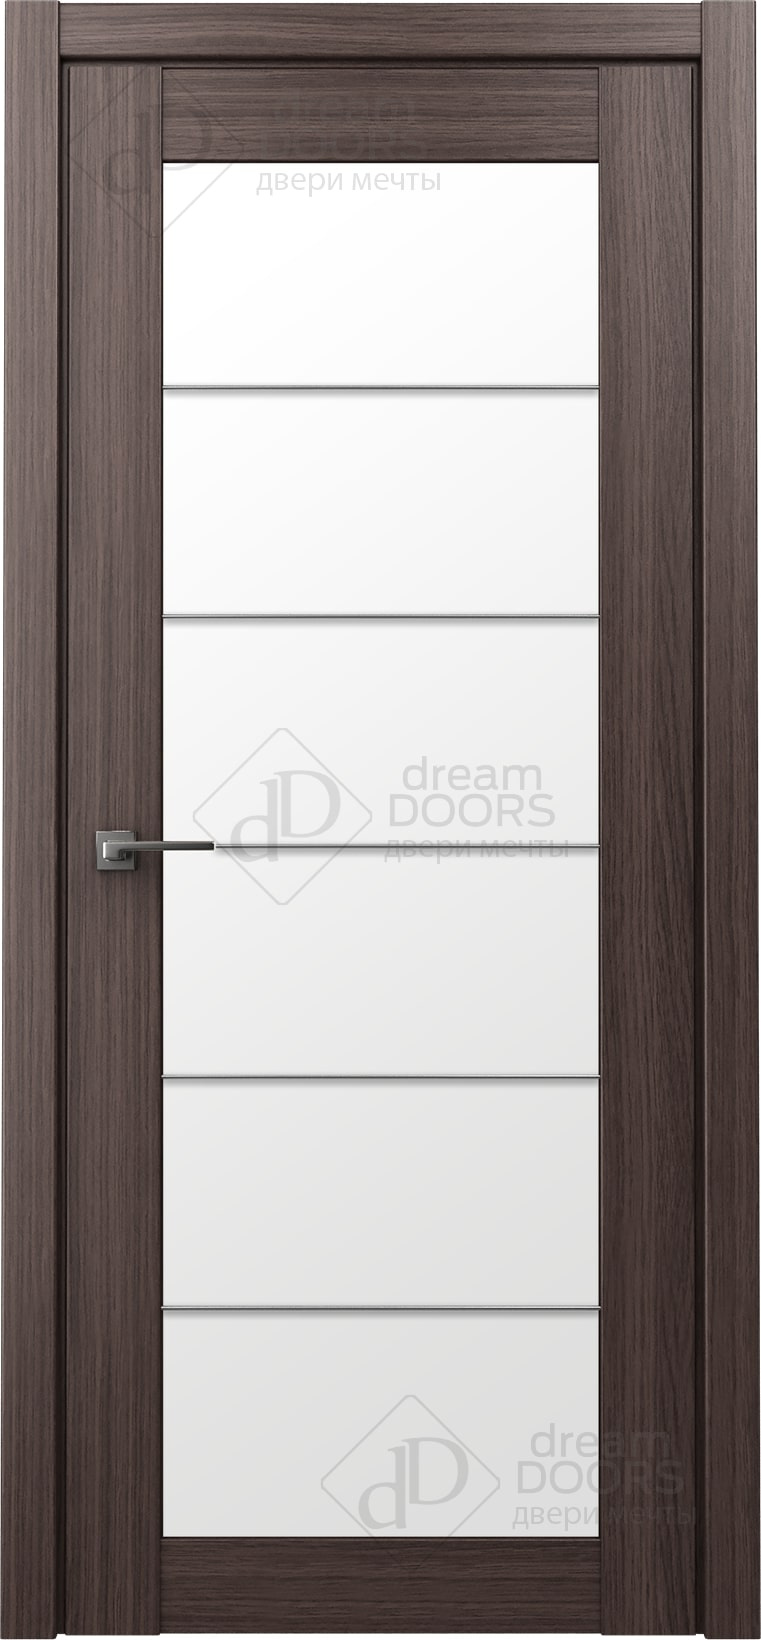 Dream Doors Межкомнатная дверь Престиж с молдингом ПО, арт. 16437 - фото №9